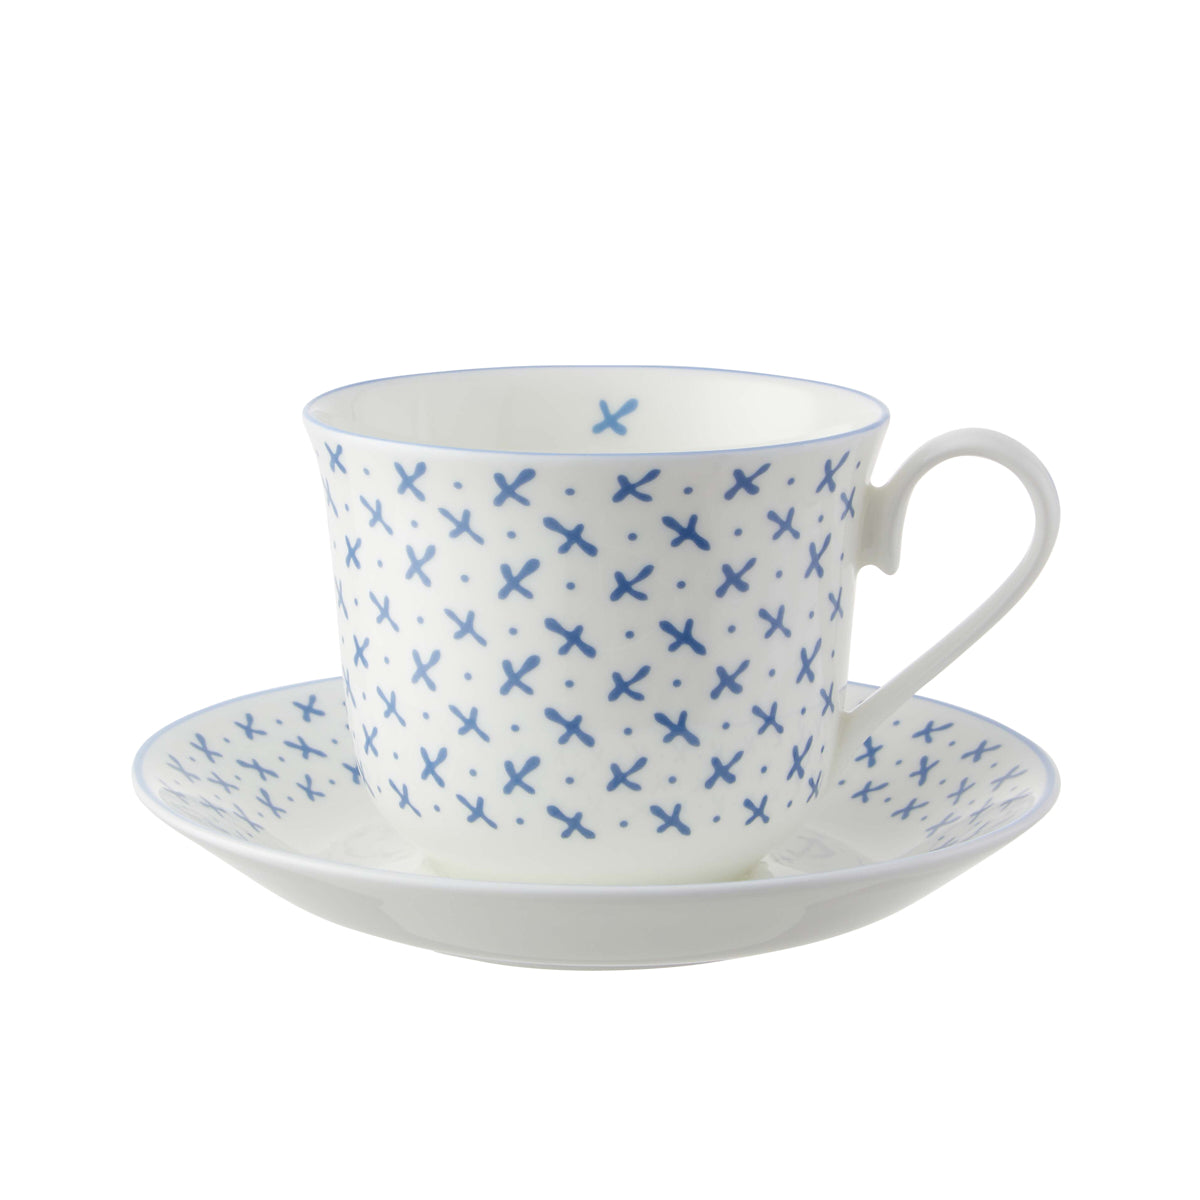 Nina Campbell Chatsworth Tea Cup & Saucer - Blue Sprig